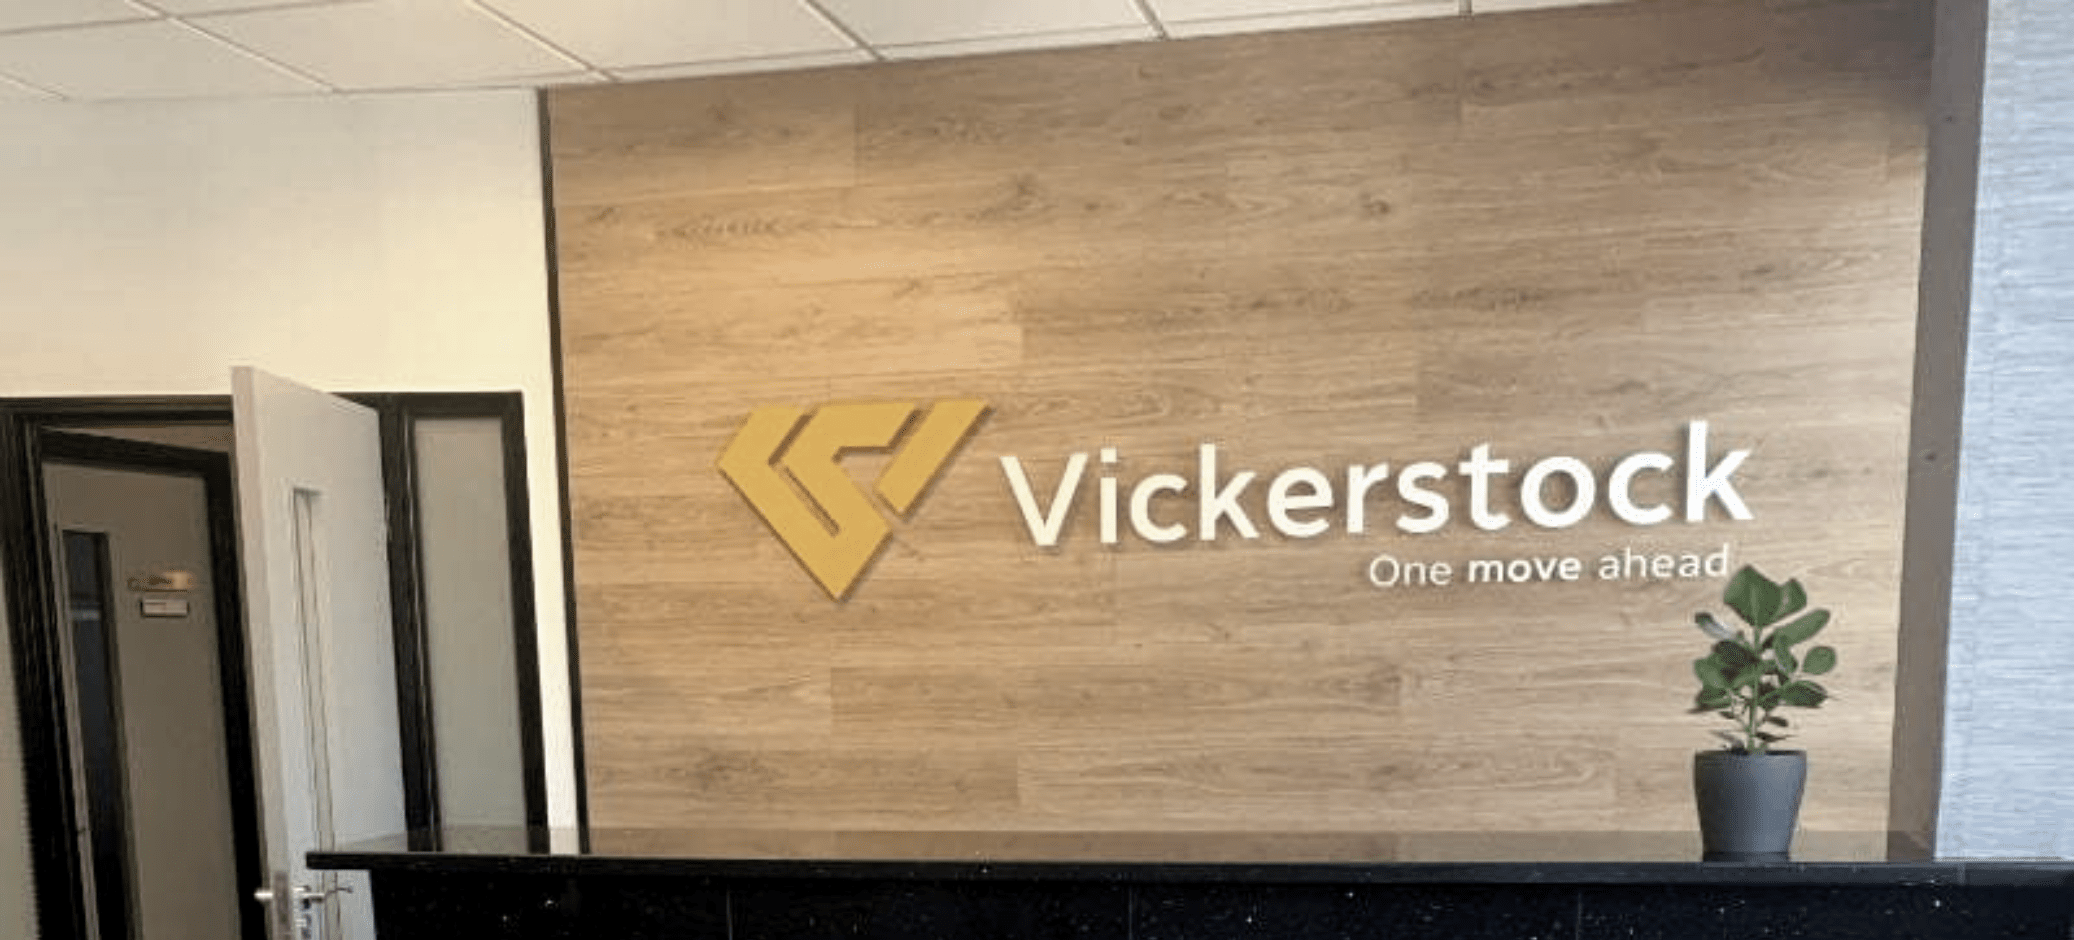 Vickerstock office